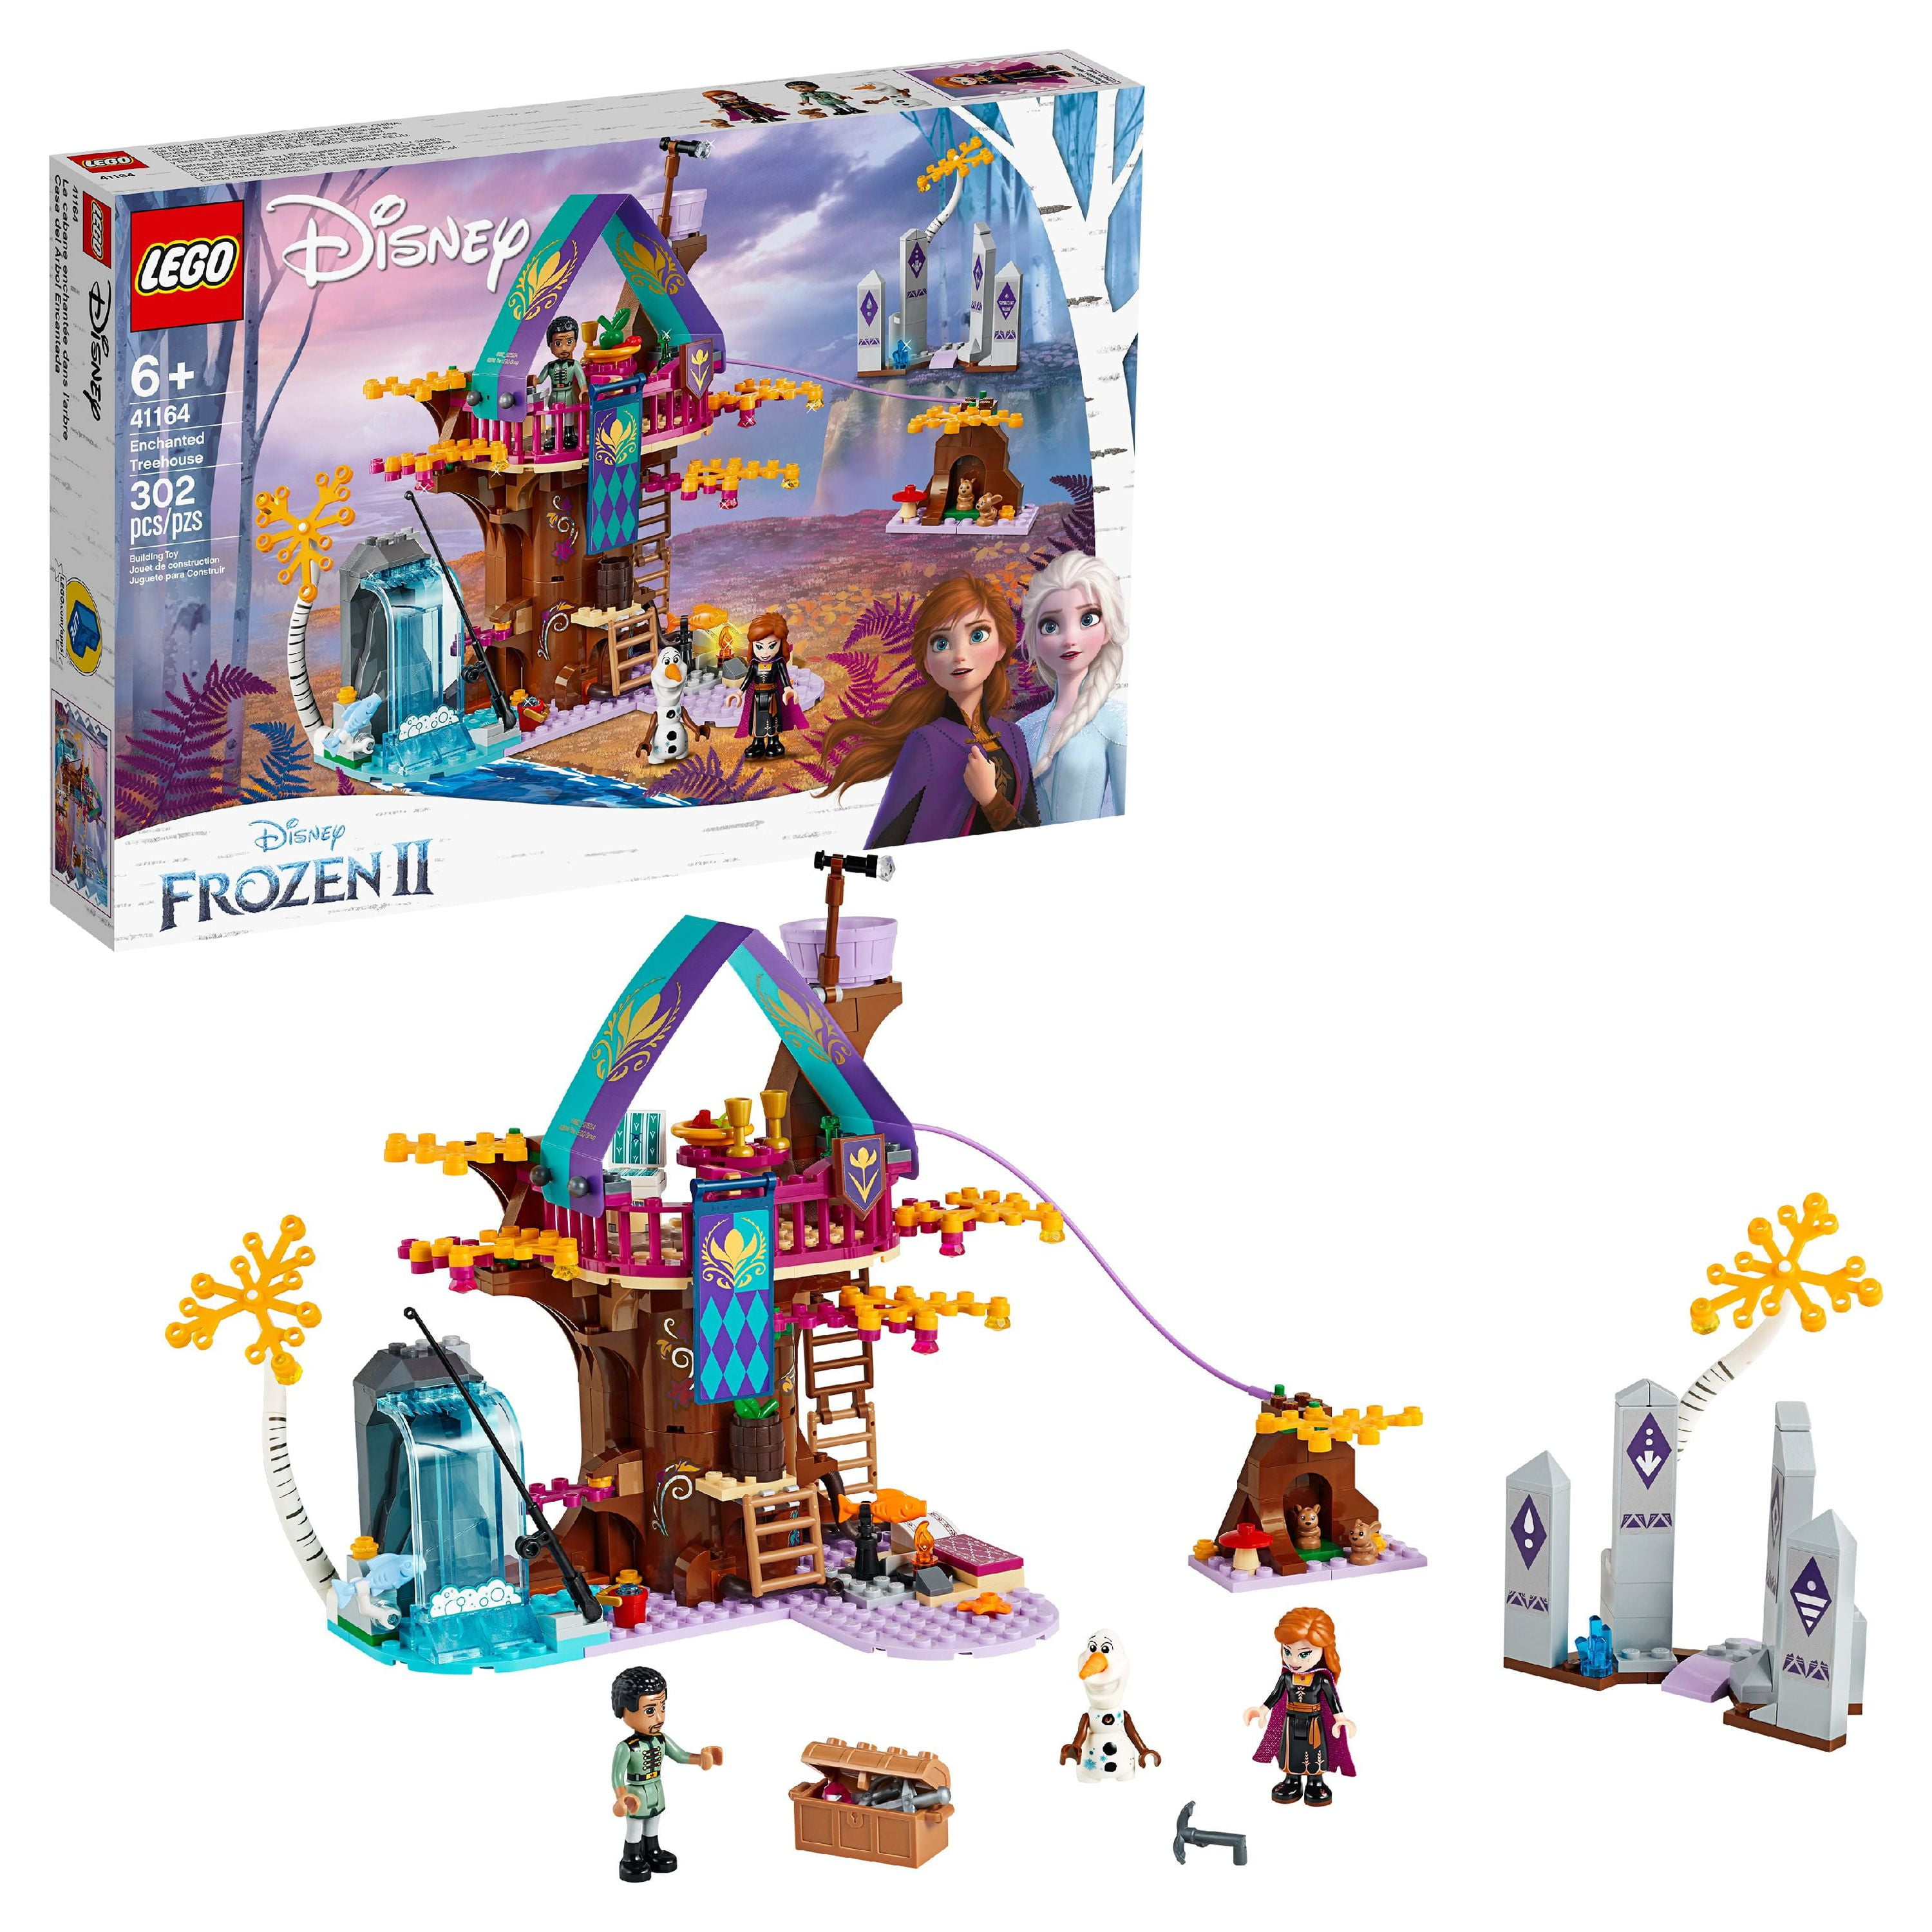 LEGO Disney Frozen II Enchanted Treehouse 41164 Toy Building Kit 